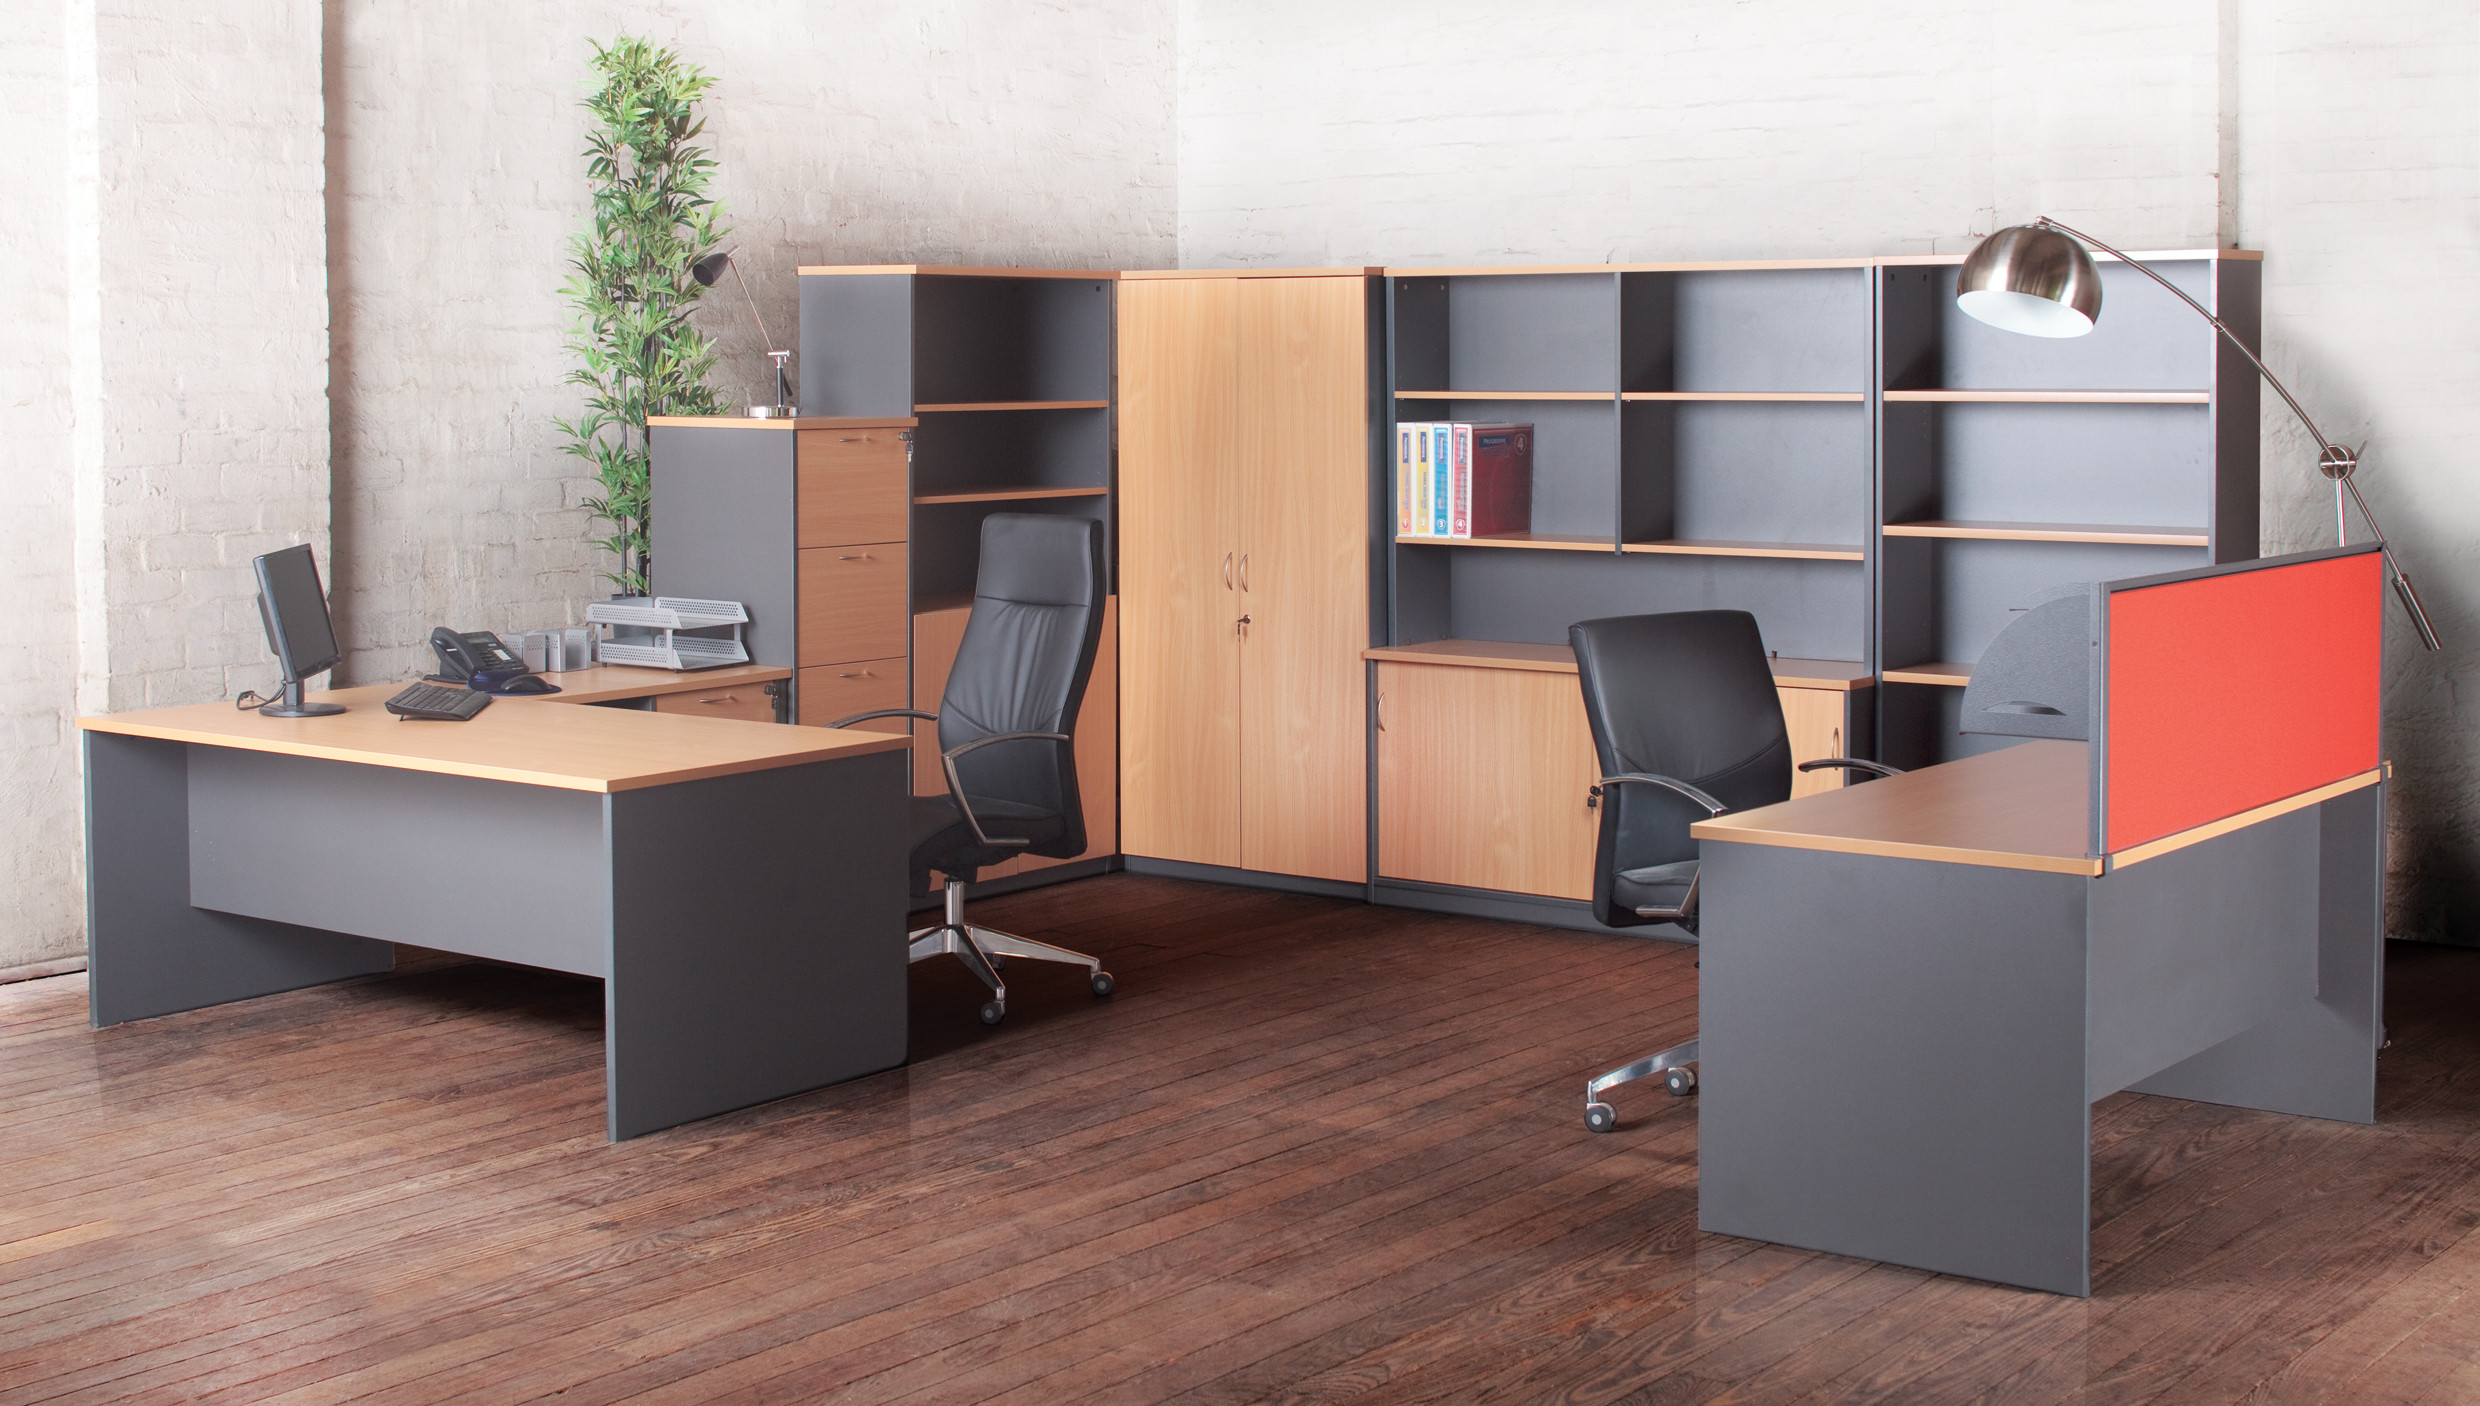 Best ideas about Office Desk Furniture
. Save or Pin fice Desks Page 1 Progressive fice Now.